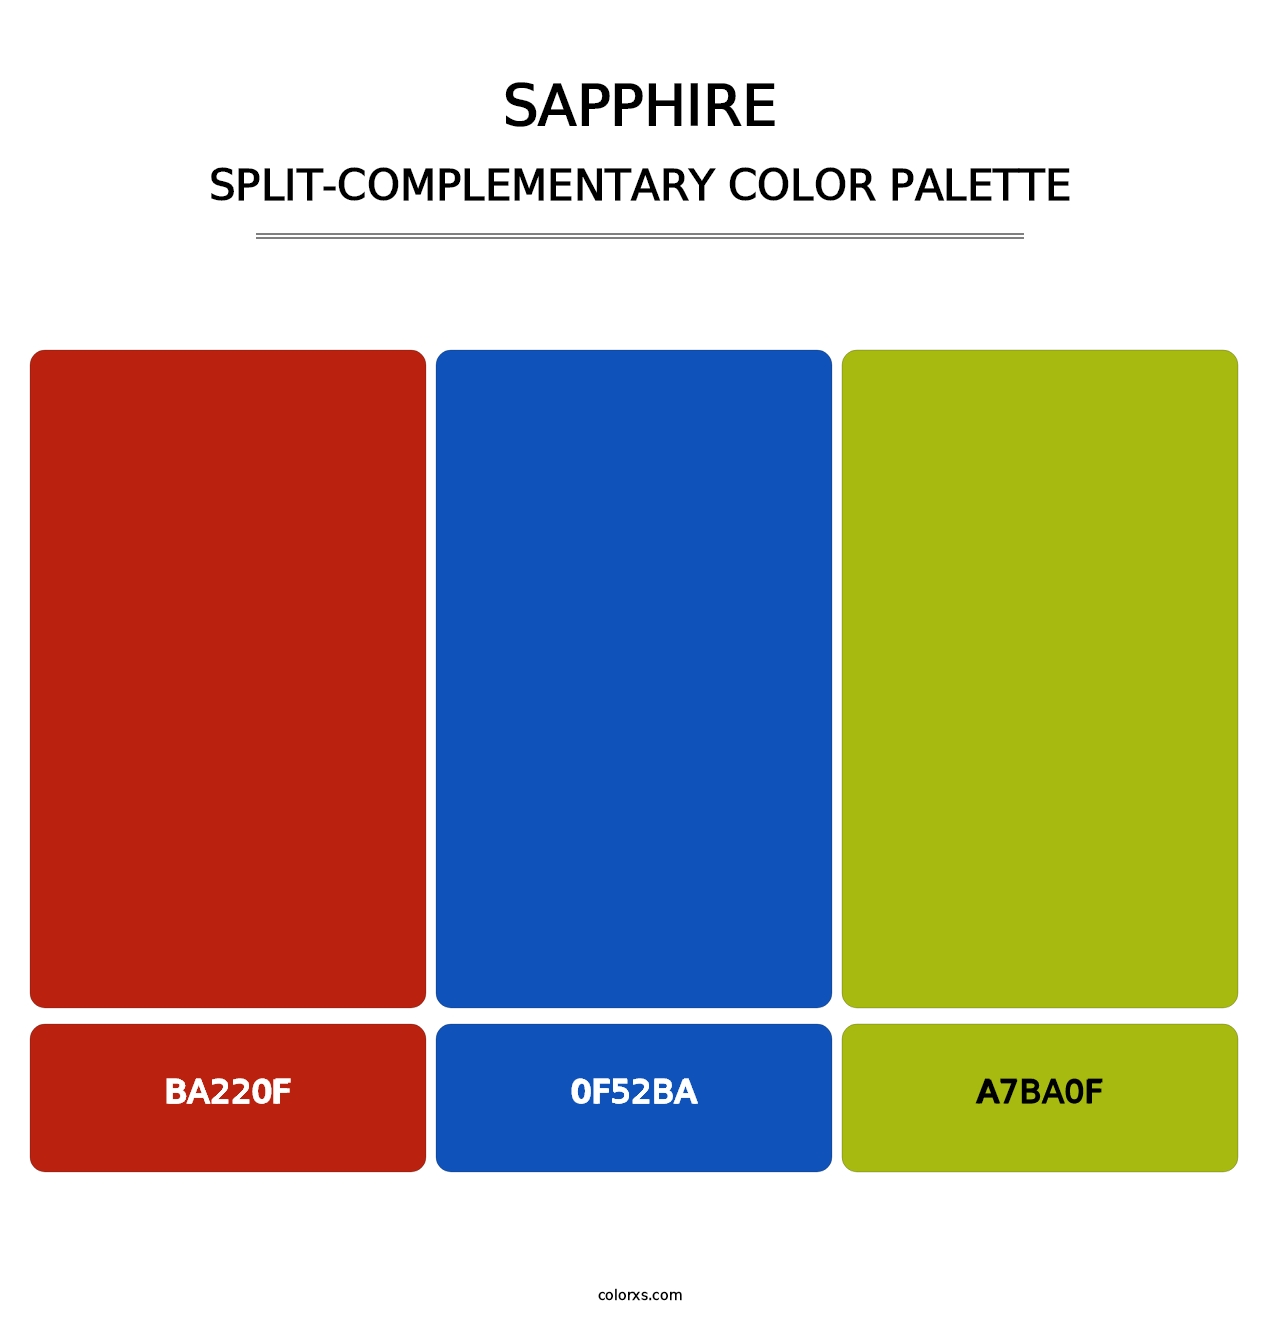 Sapphire - Split-Complementary Color Palette